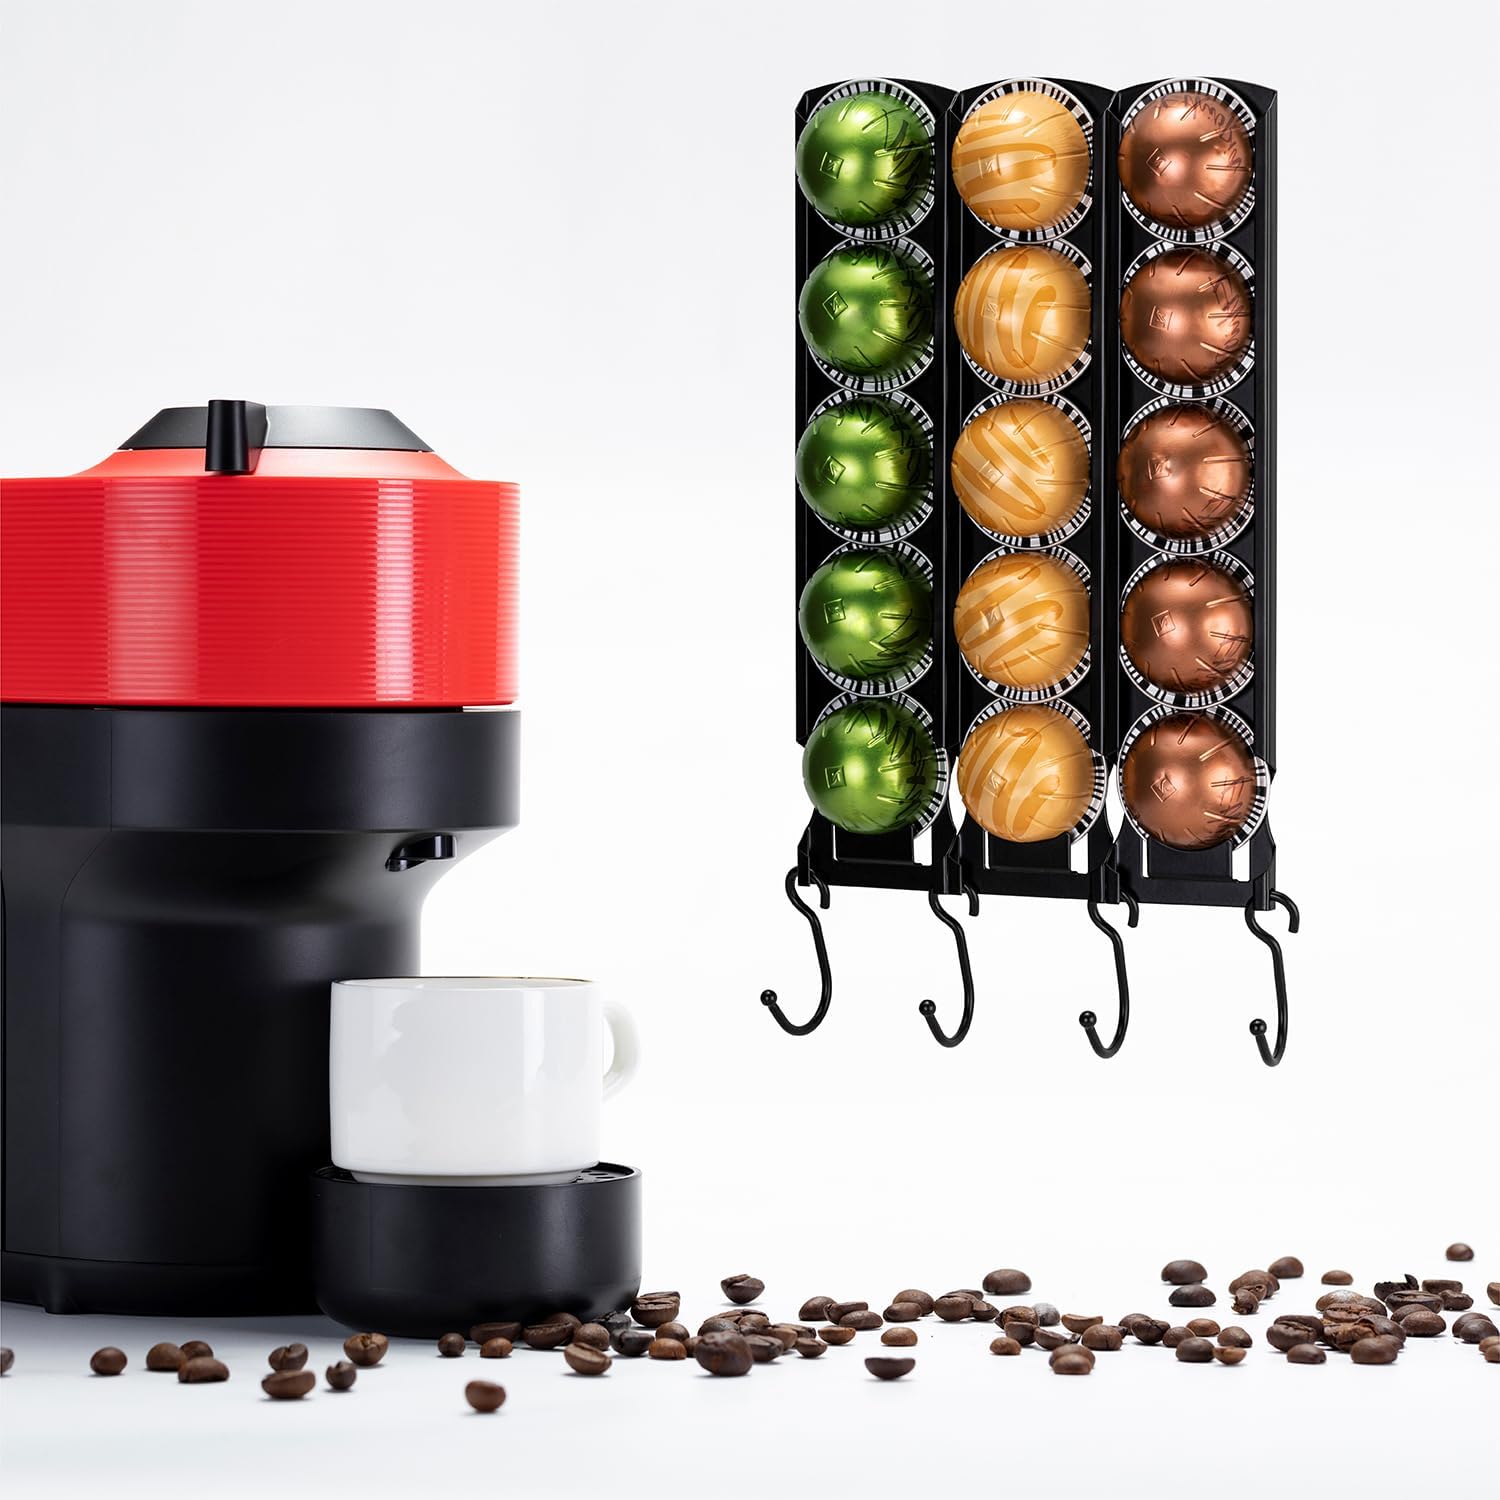 Nespresso Pods Holder for Coffee Pod Holder Organizer Wall Mount Under Cabinet Coffee Maker（15 pods）